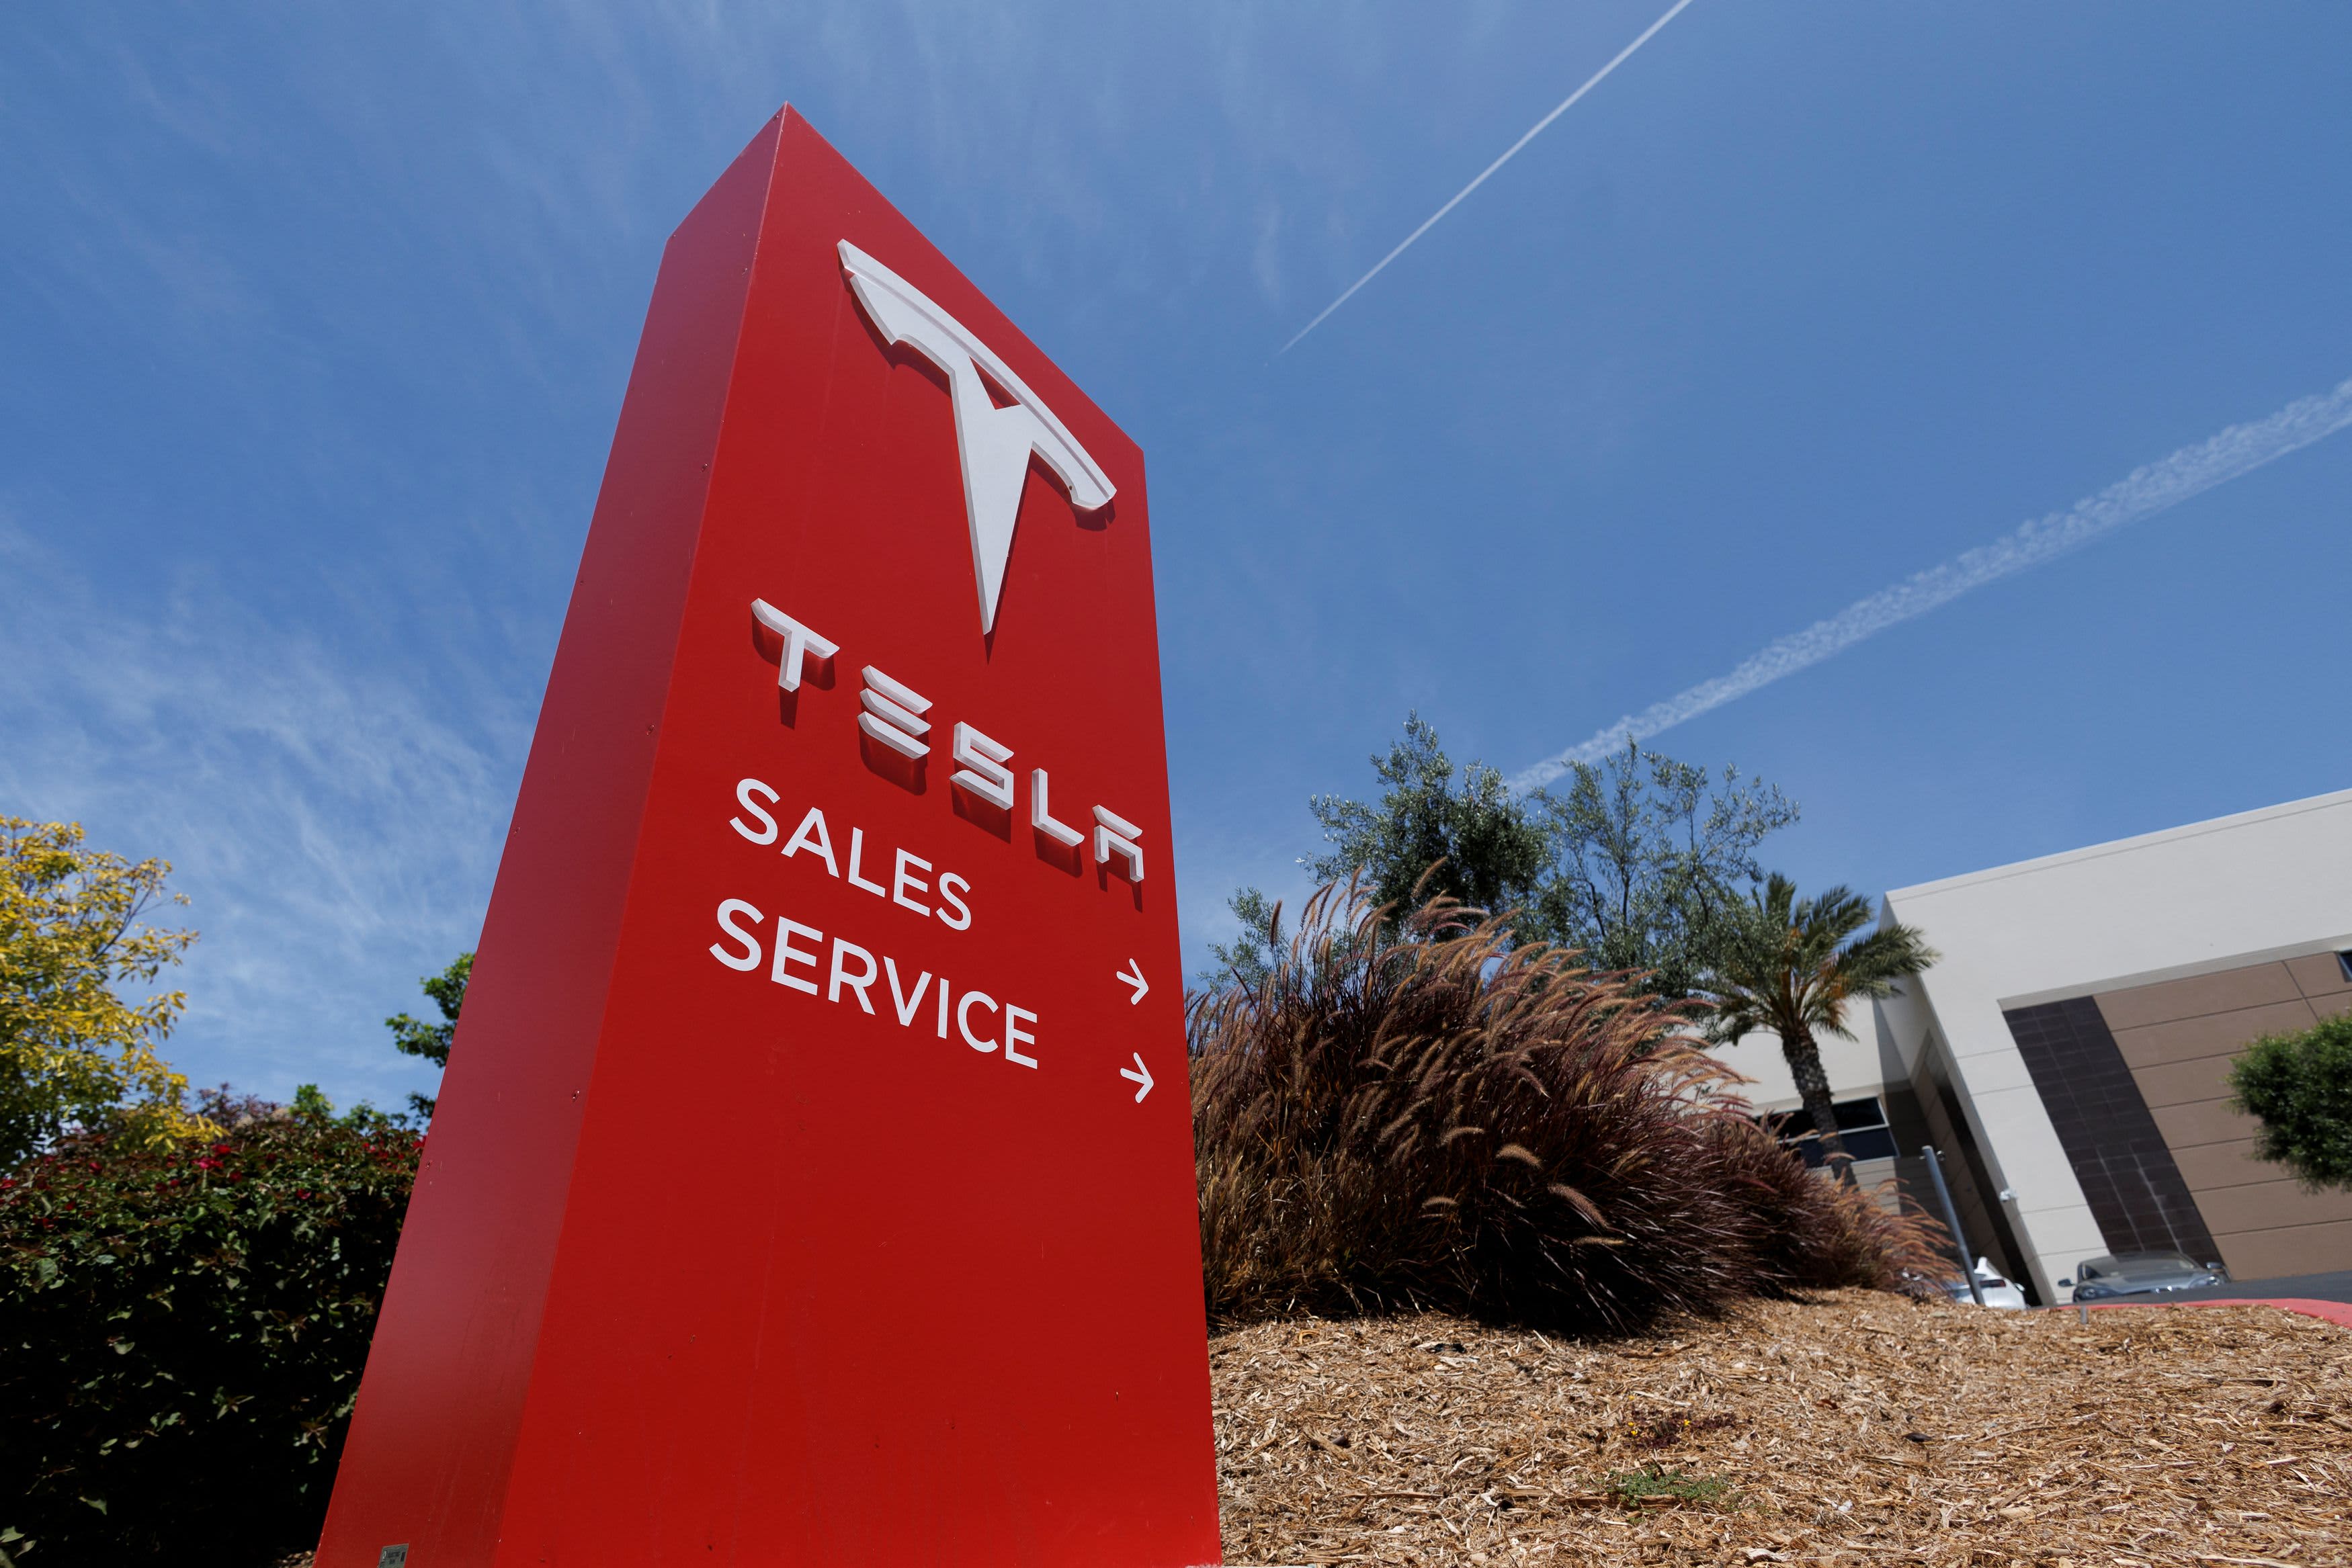 Oppenheimer downgrades Tesla, thinks Elon Musk's handling of Twitter could hurt electric car maker